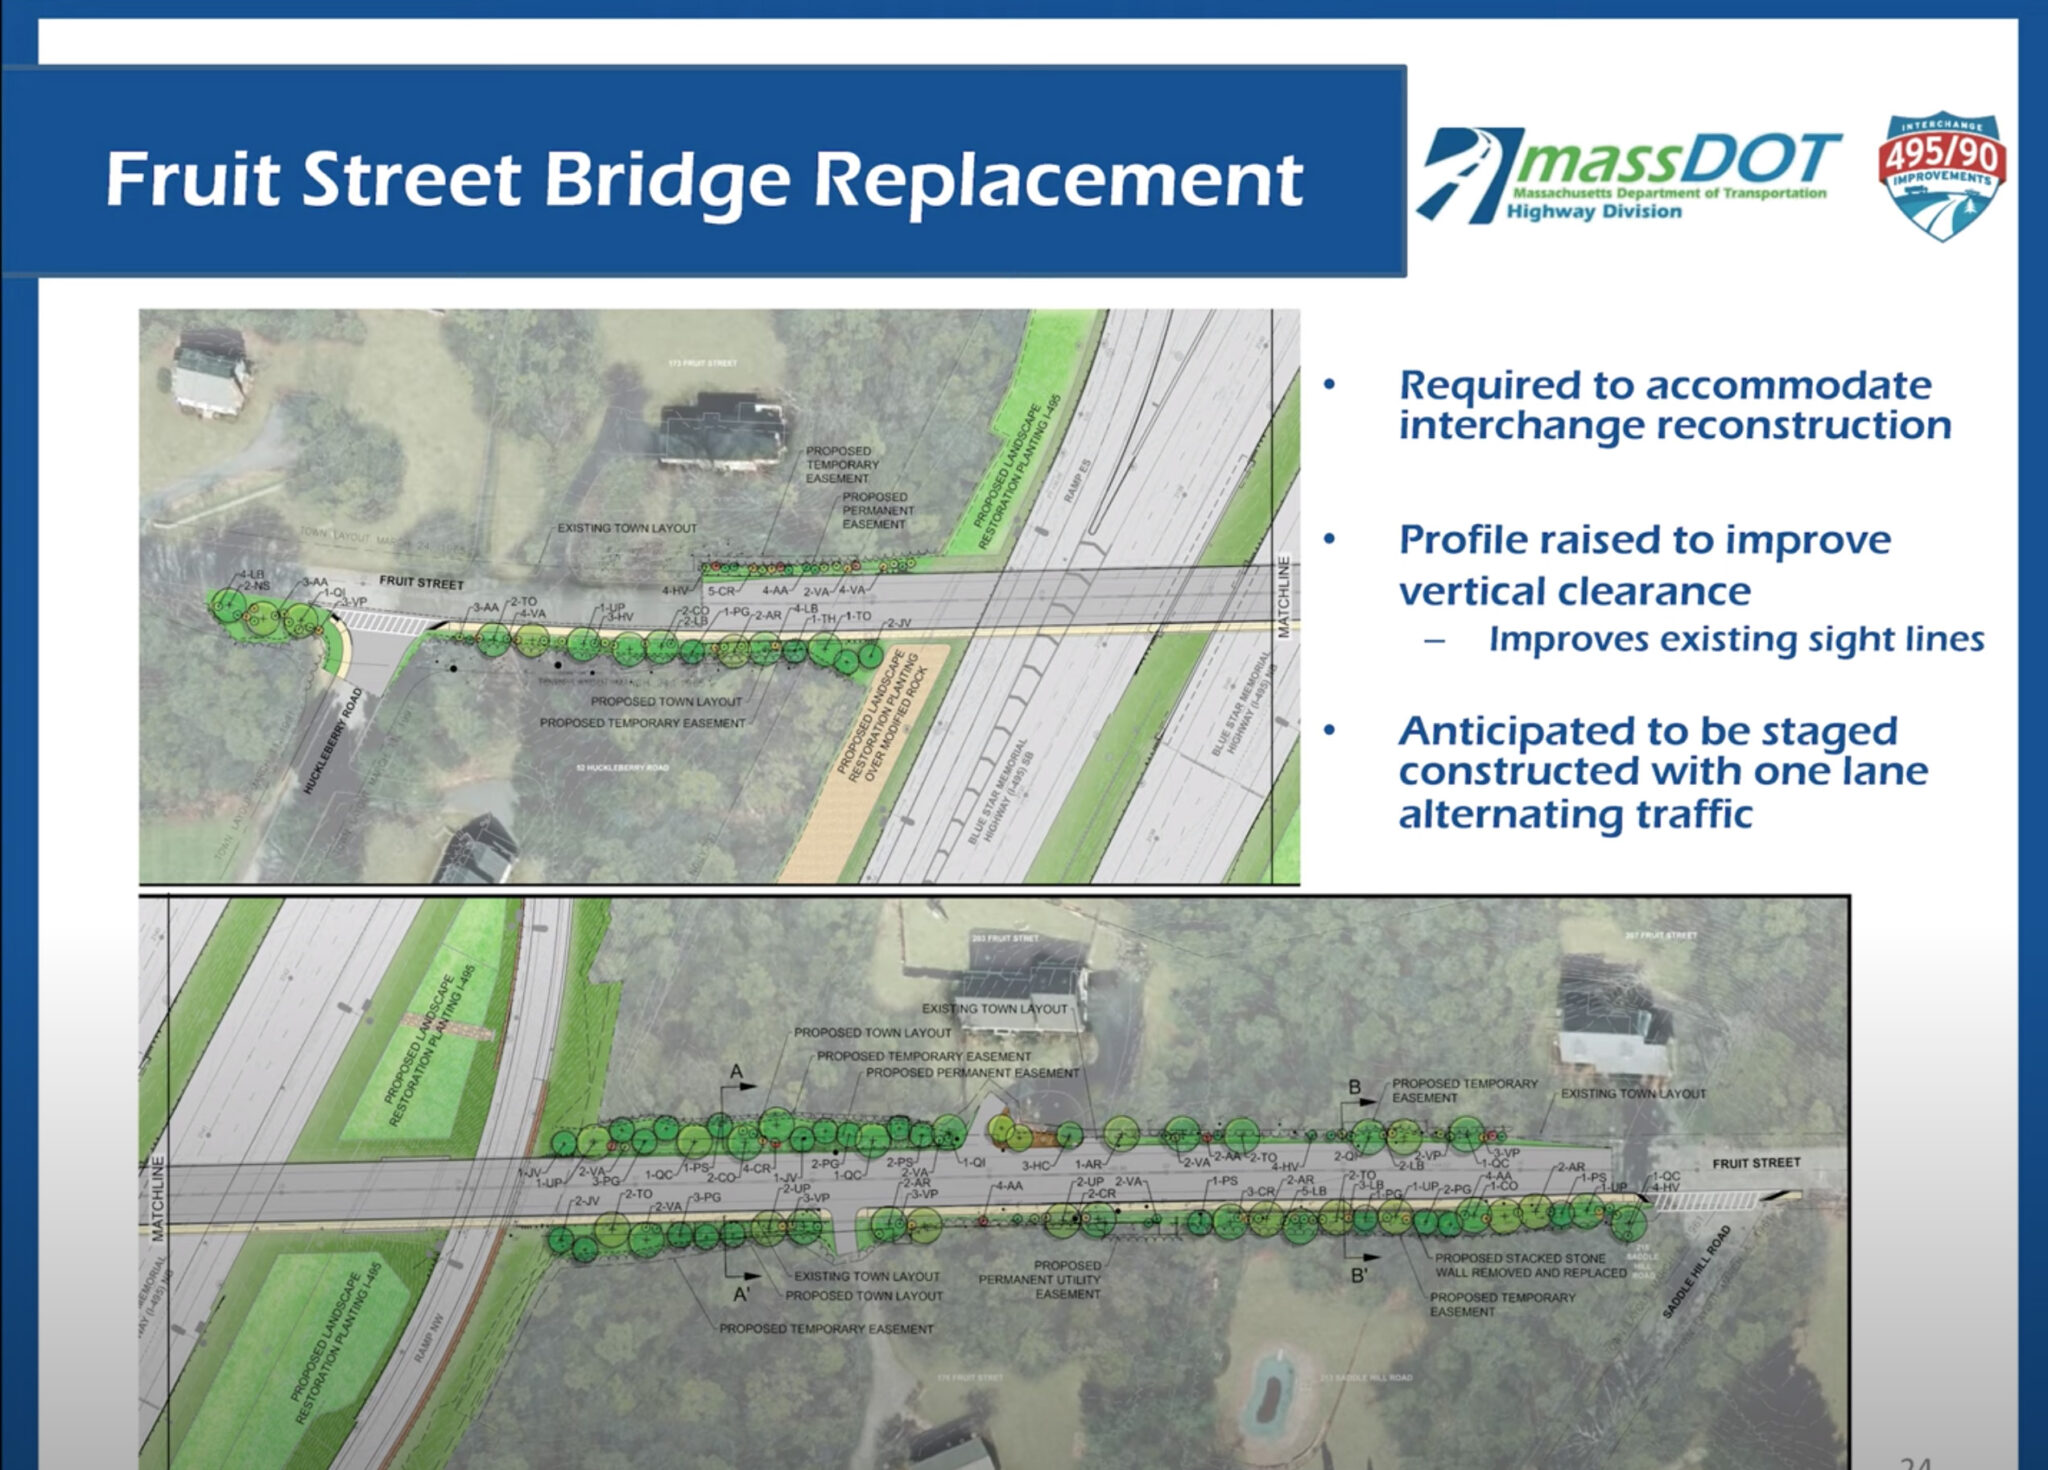 MassDOT Interchange Improvement Project includes replacement of Fruit Street bridge